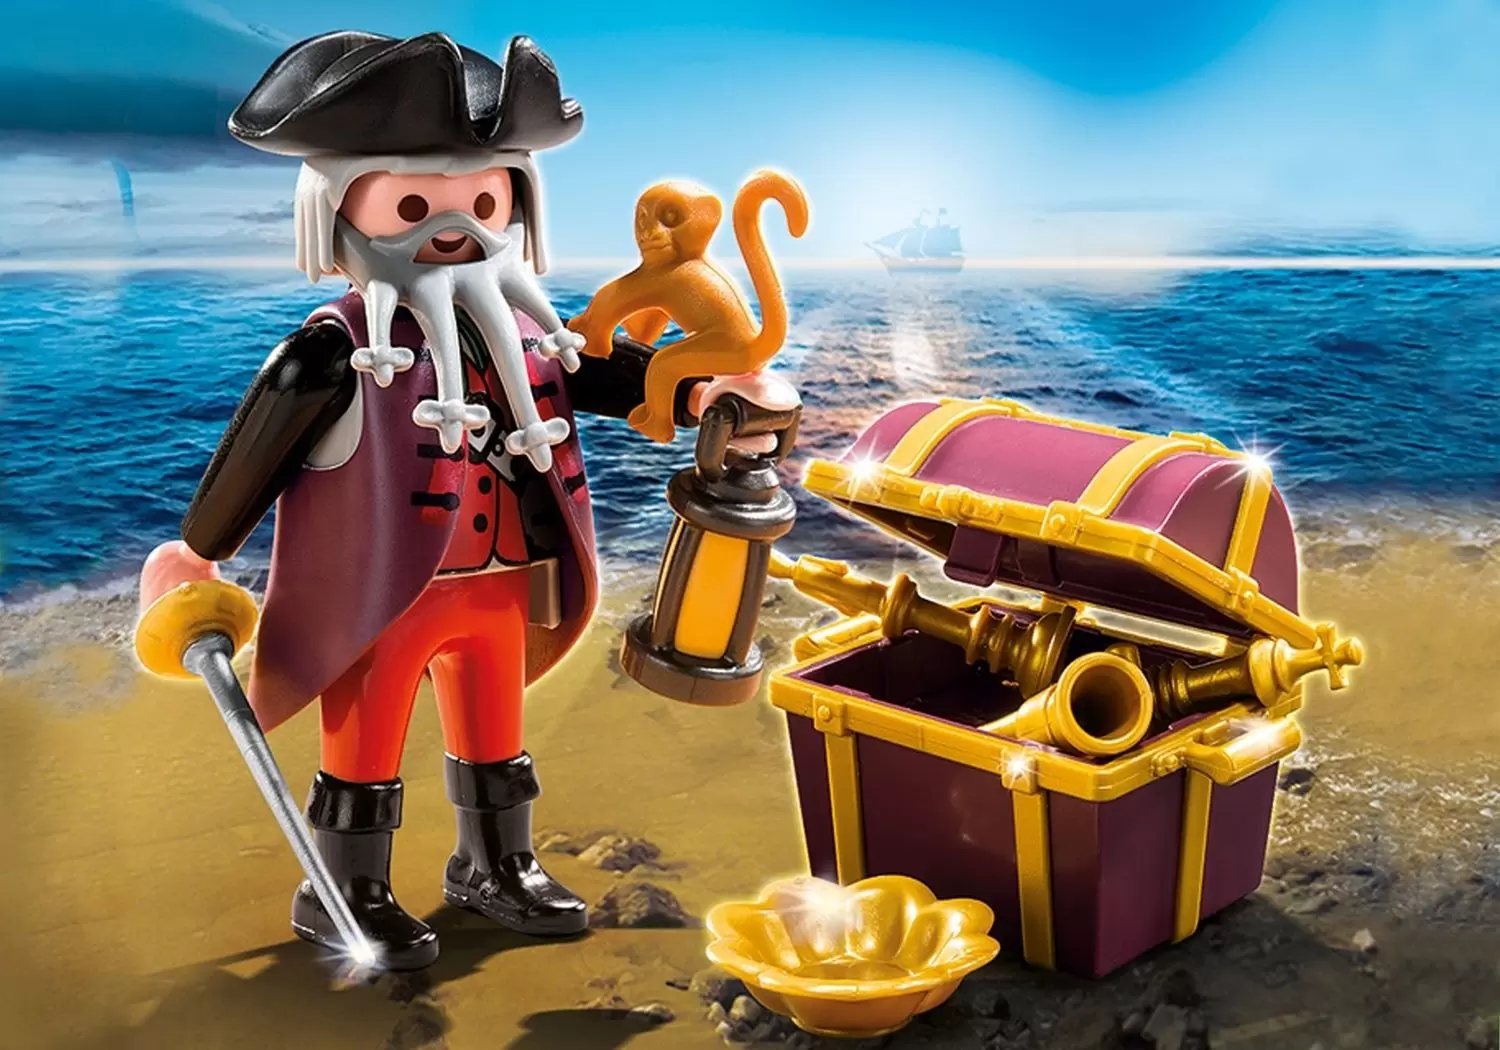 Playmobil SpecialPlus - Pirate with treasure chest